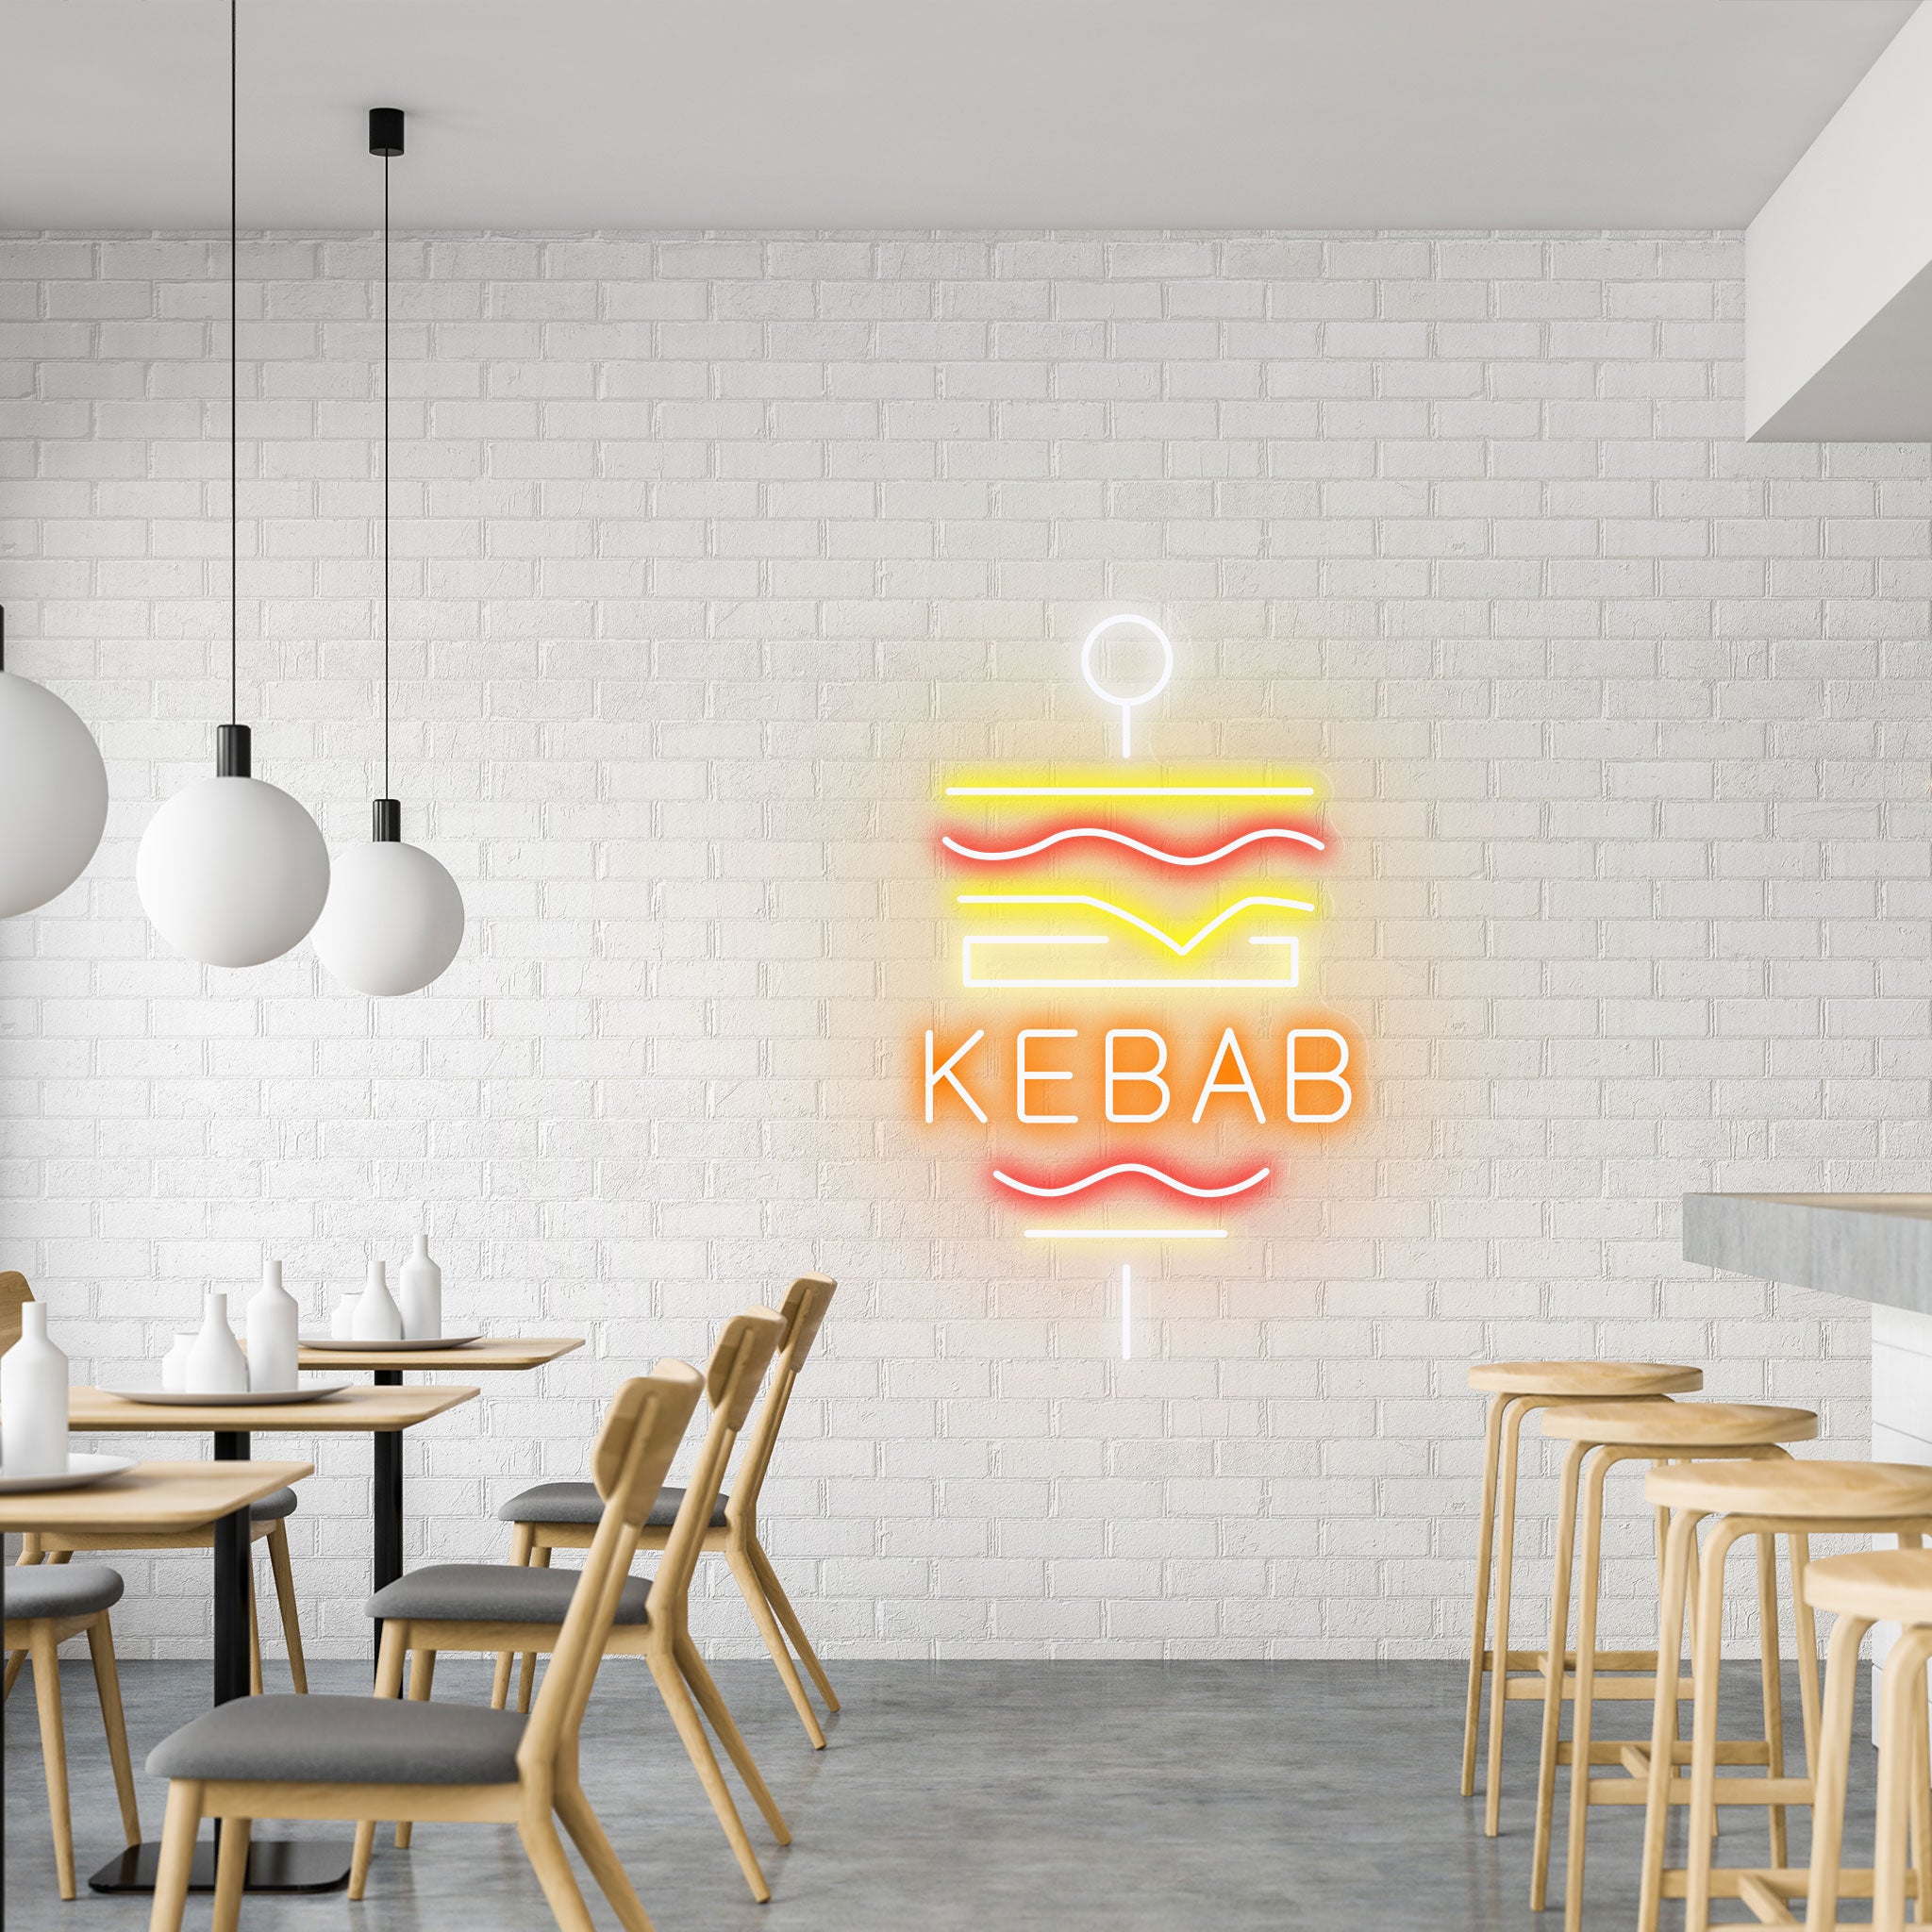 Kebab - Neon Sign - Restaurant Venue